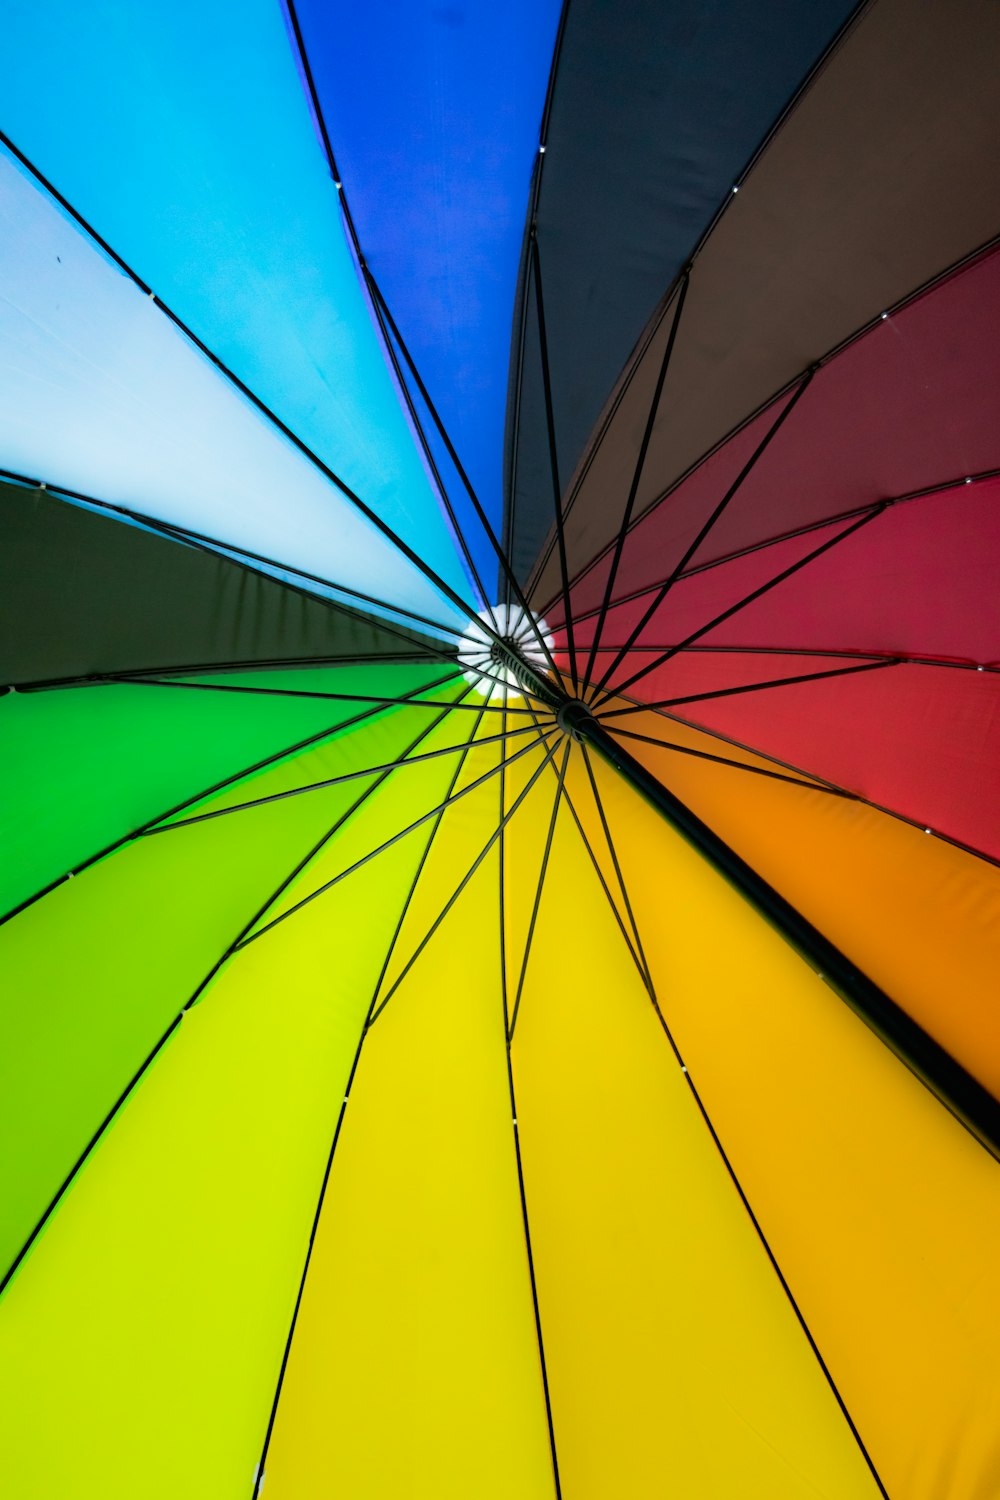 closeup photo of multicolored umbrella